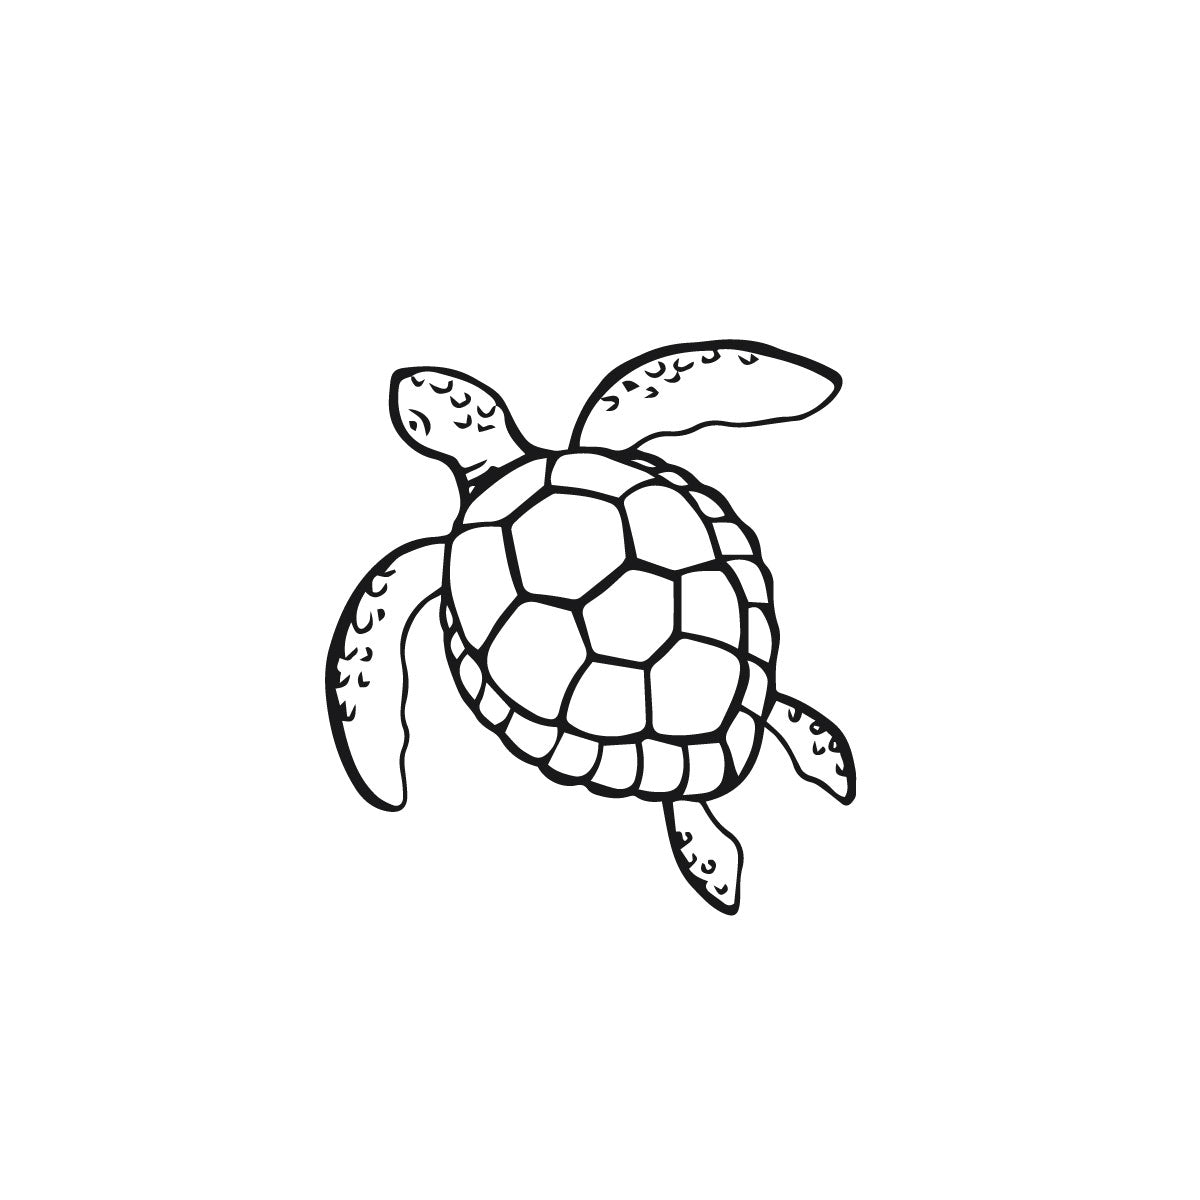 Turtle temporary tattoo